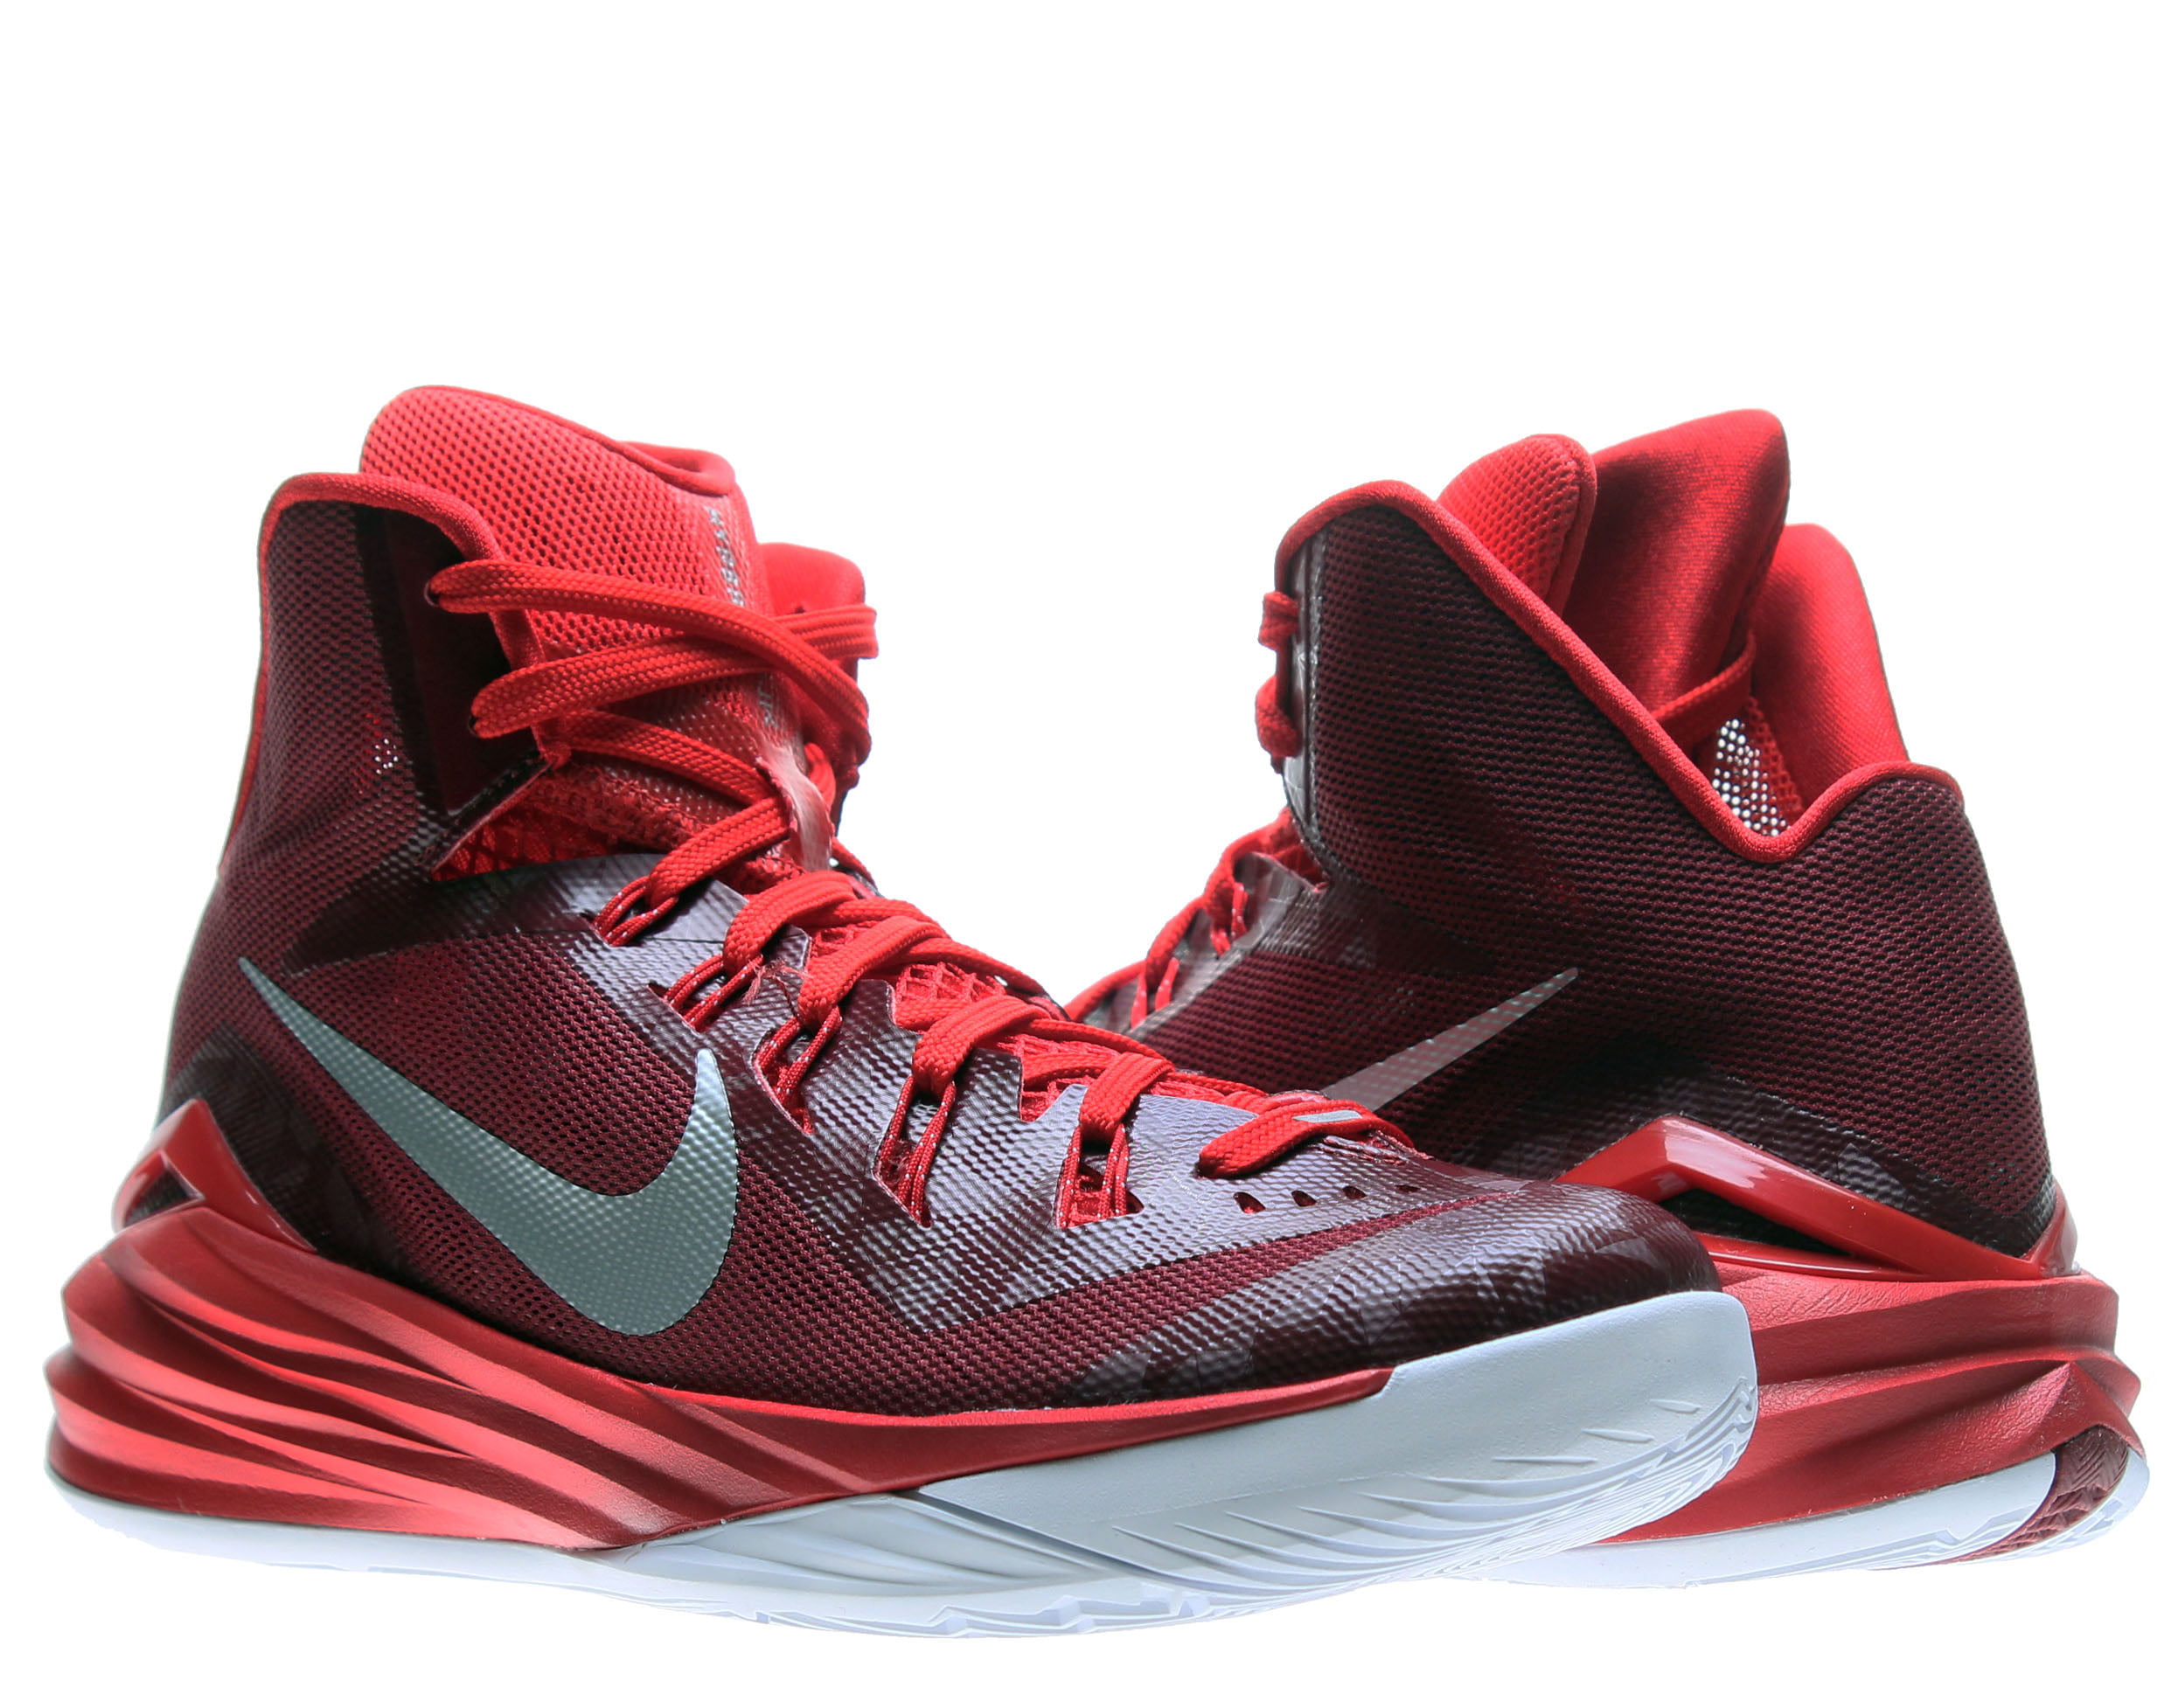 Nike Hyperdunk 2014 TB Men's Basketball Shoes Size 7.5 - Walmart.com